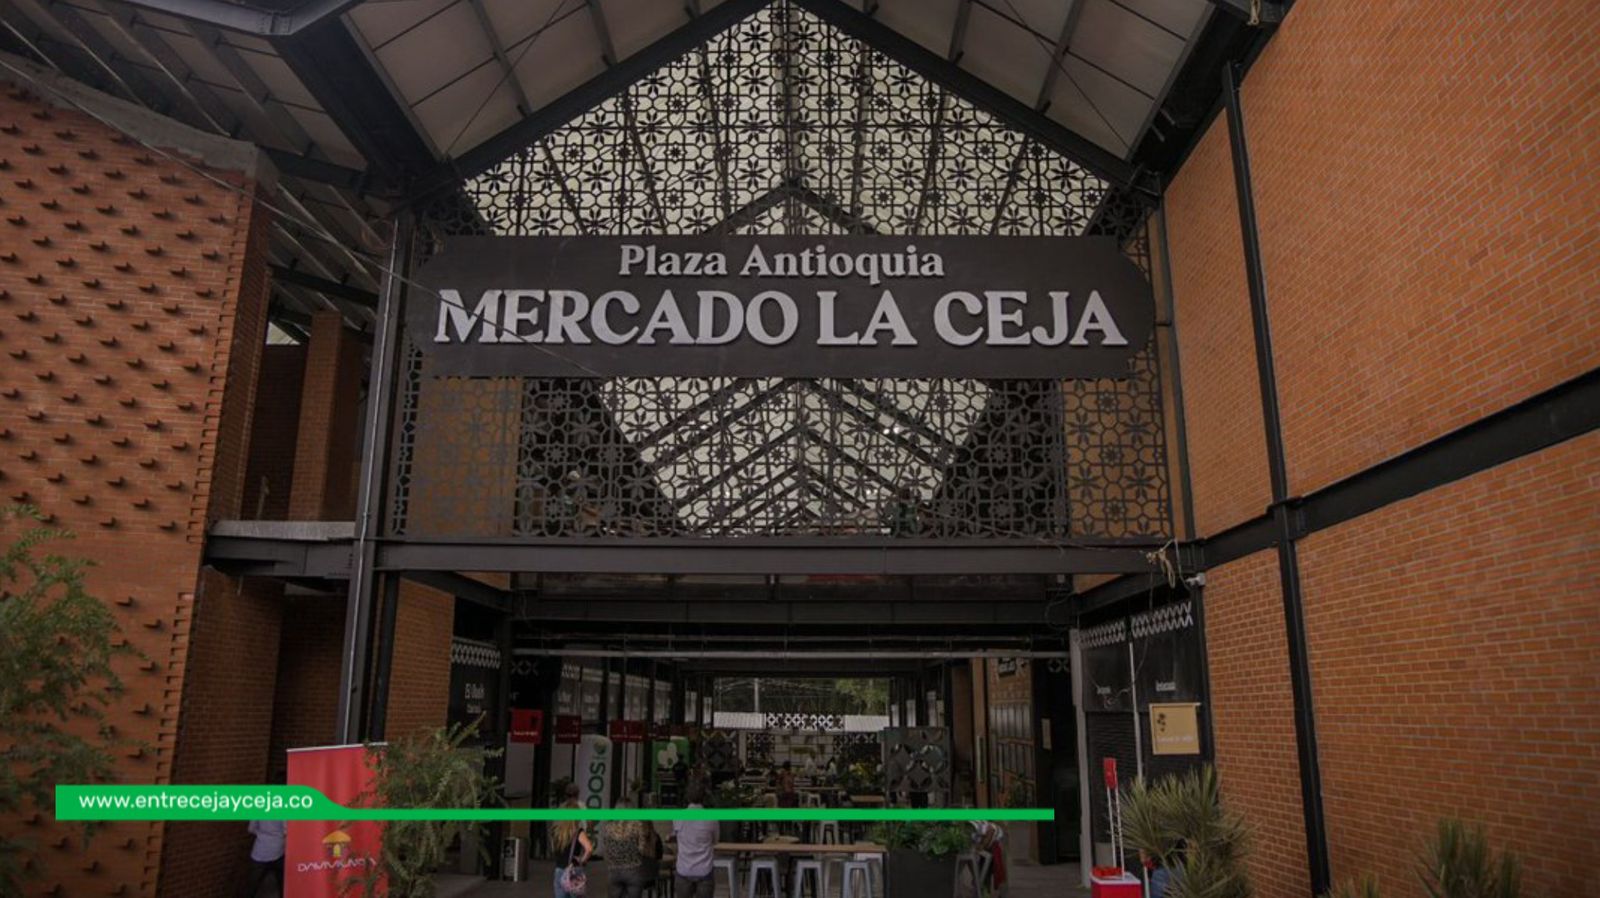 La Ceja - Plaza de Mercado La Ceja - Entre Ceja y Ceja